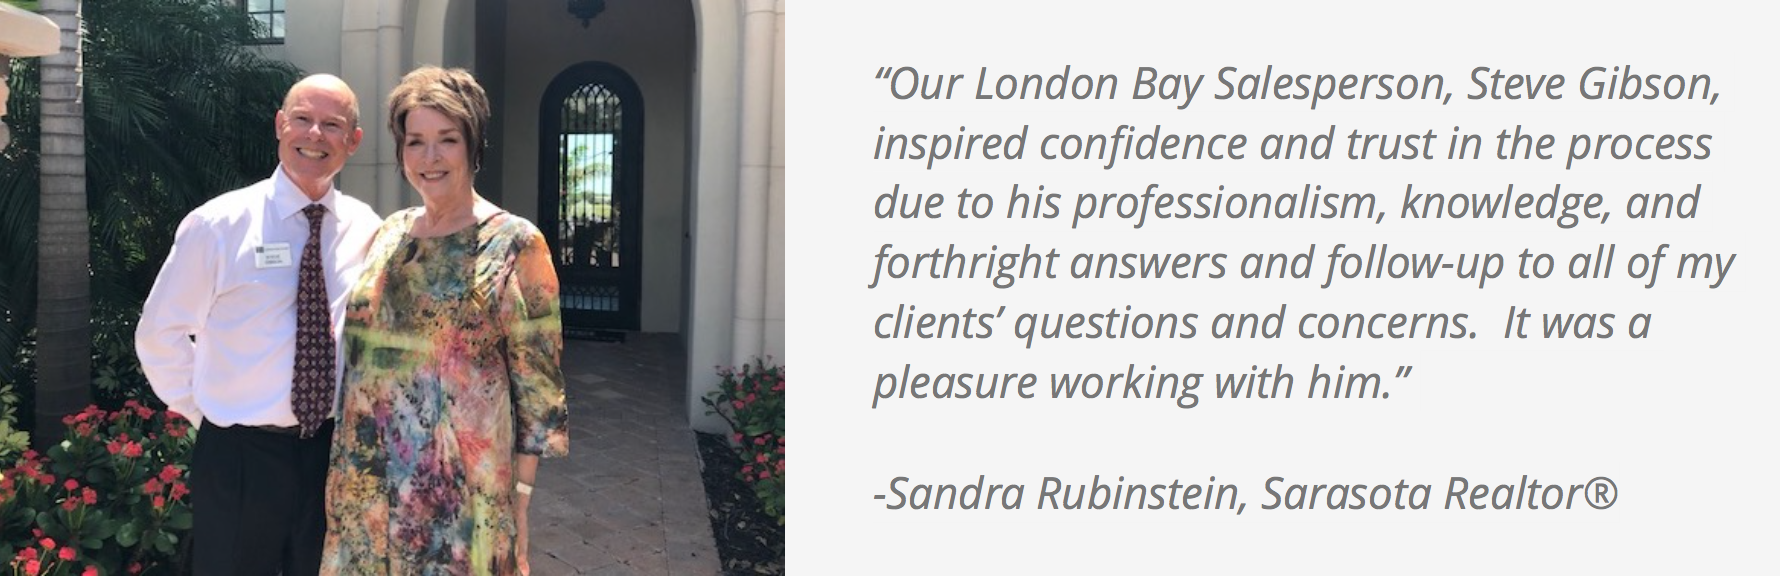 Sales Executive Steve Gibson with Sarasota Realtor® Sandra Rubinstein.